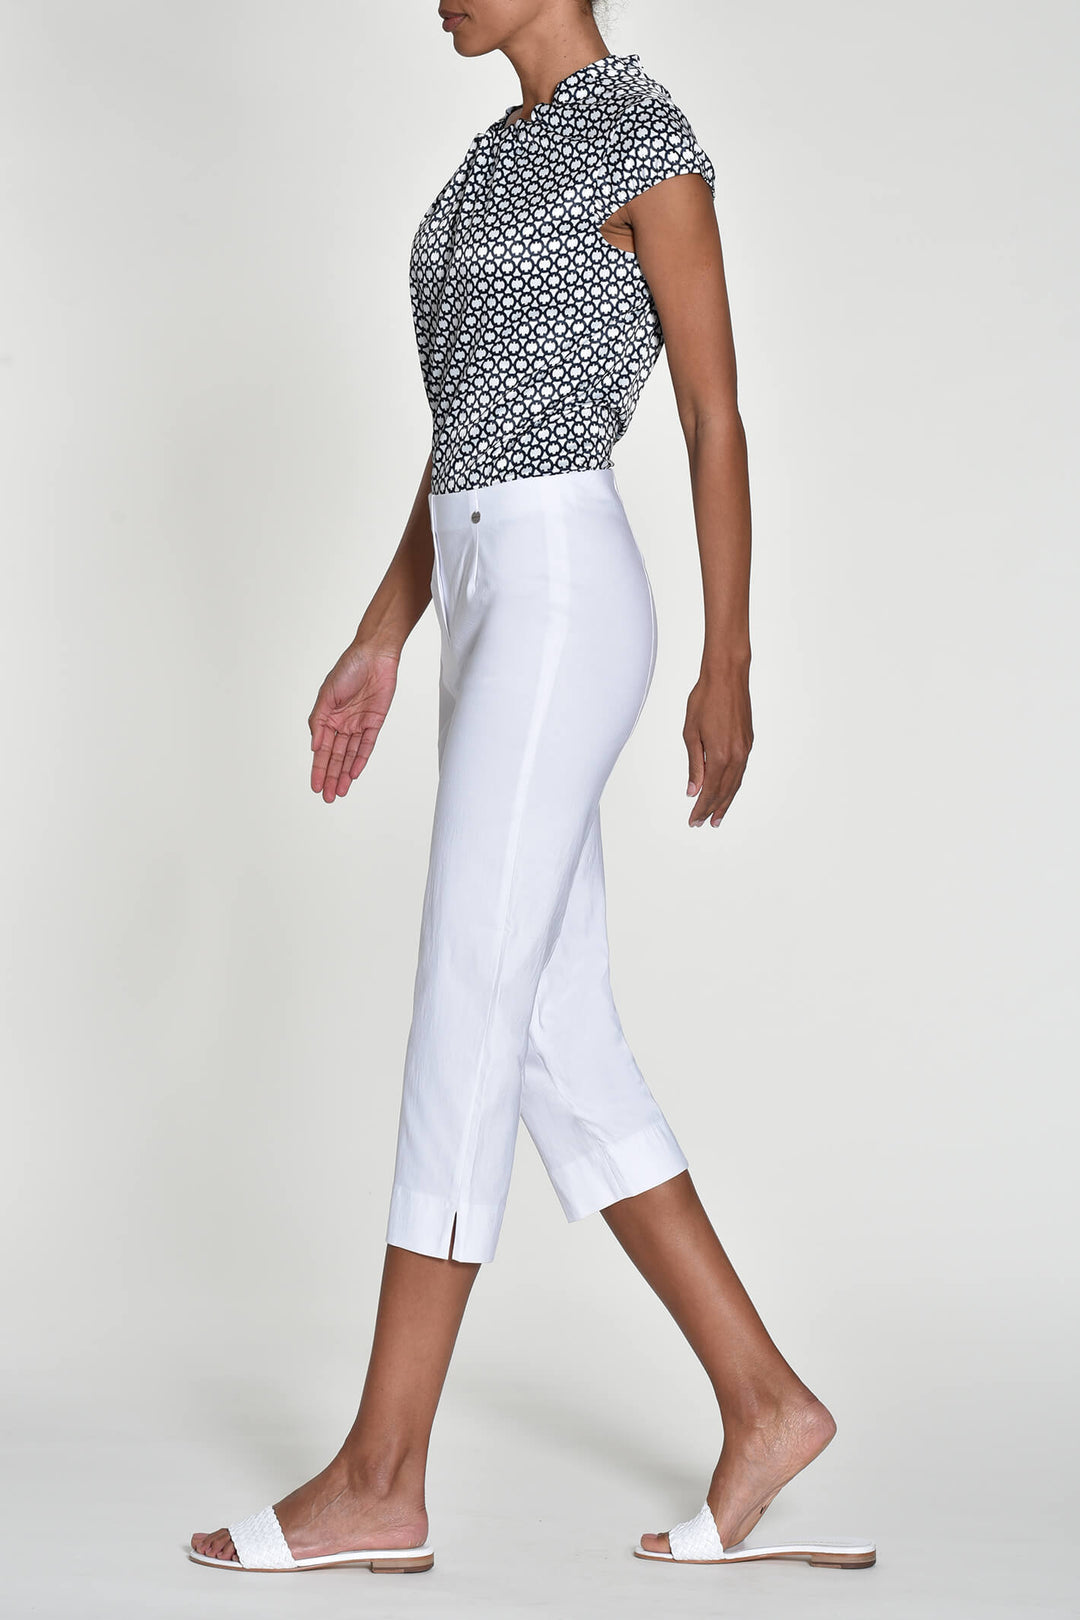 Robell Marie 07 White Capri Trousers 51576 5499 - Olivia Grace Fashion